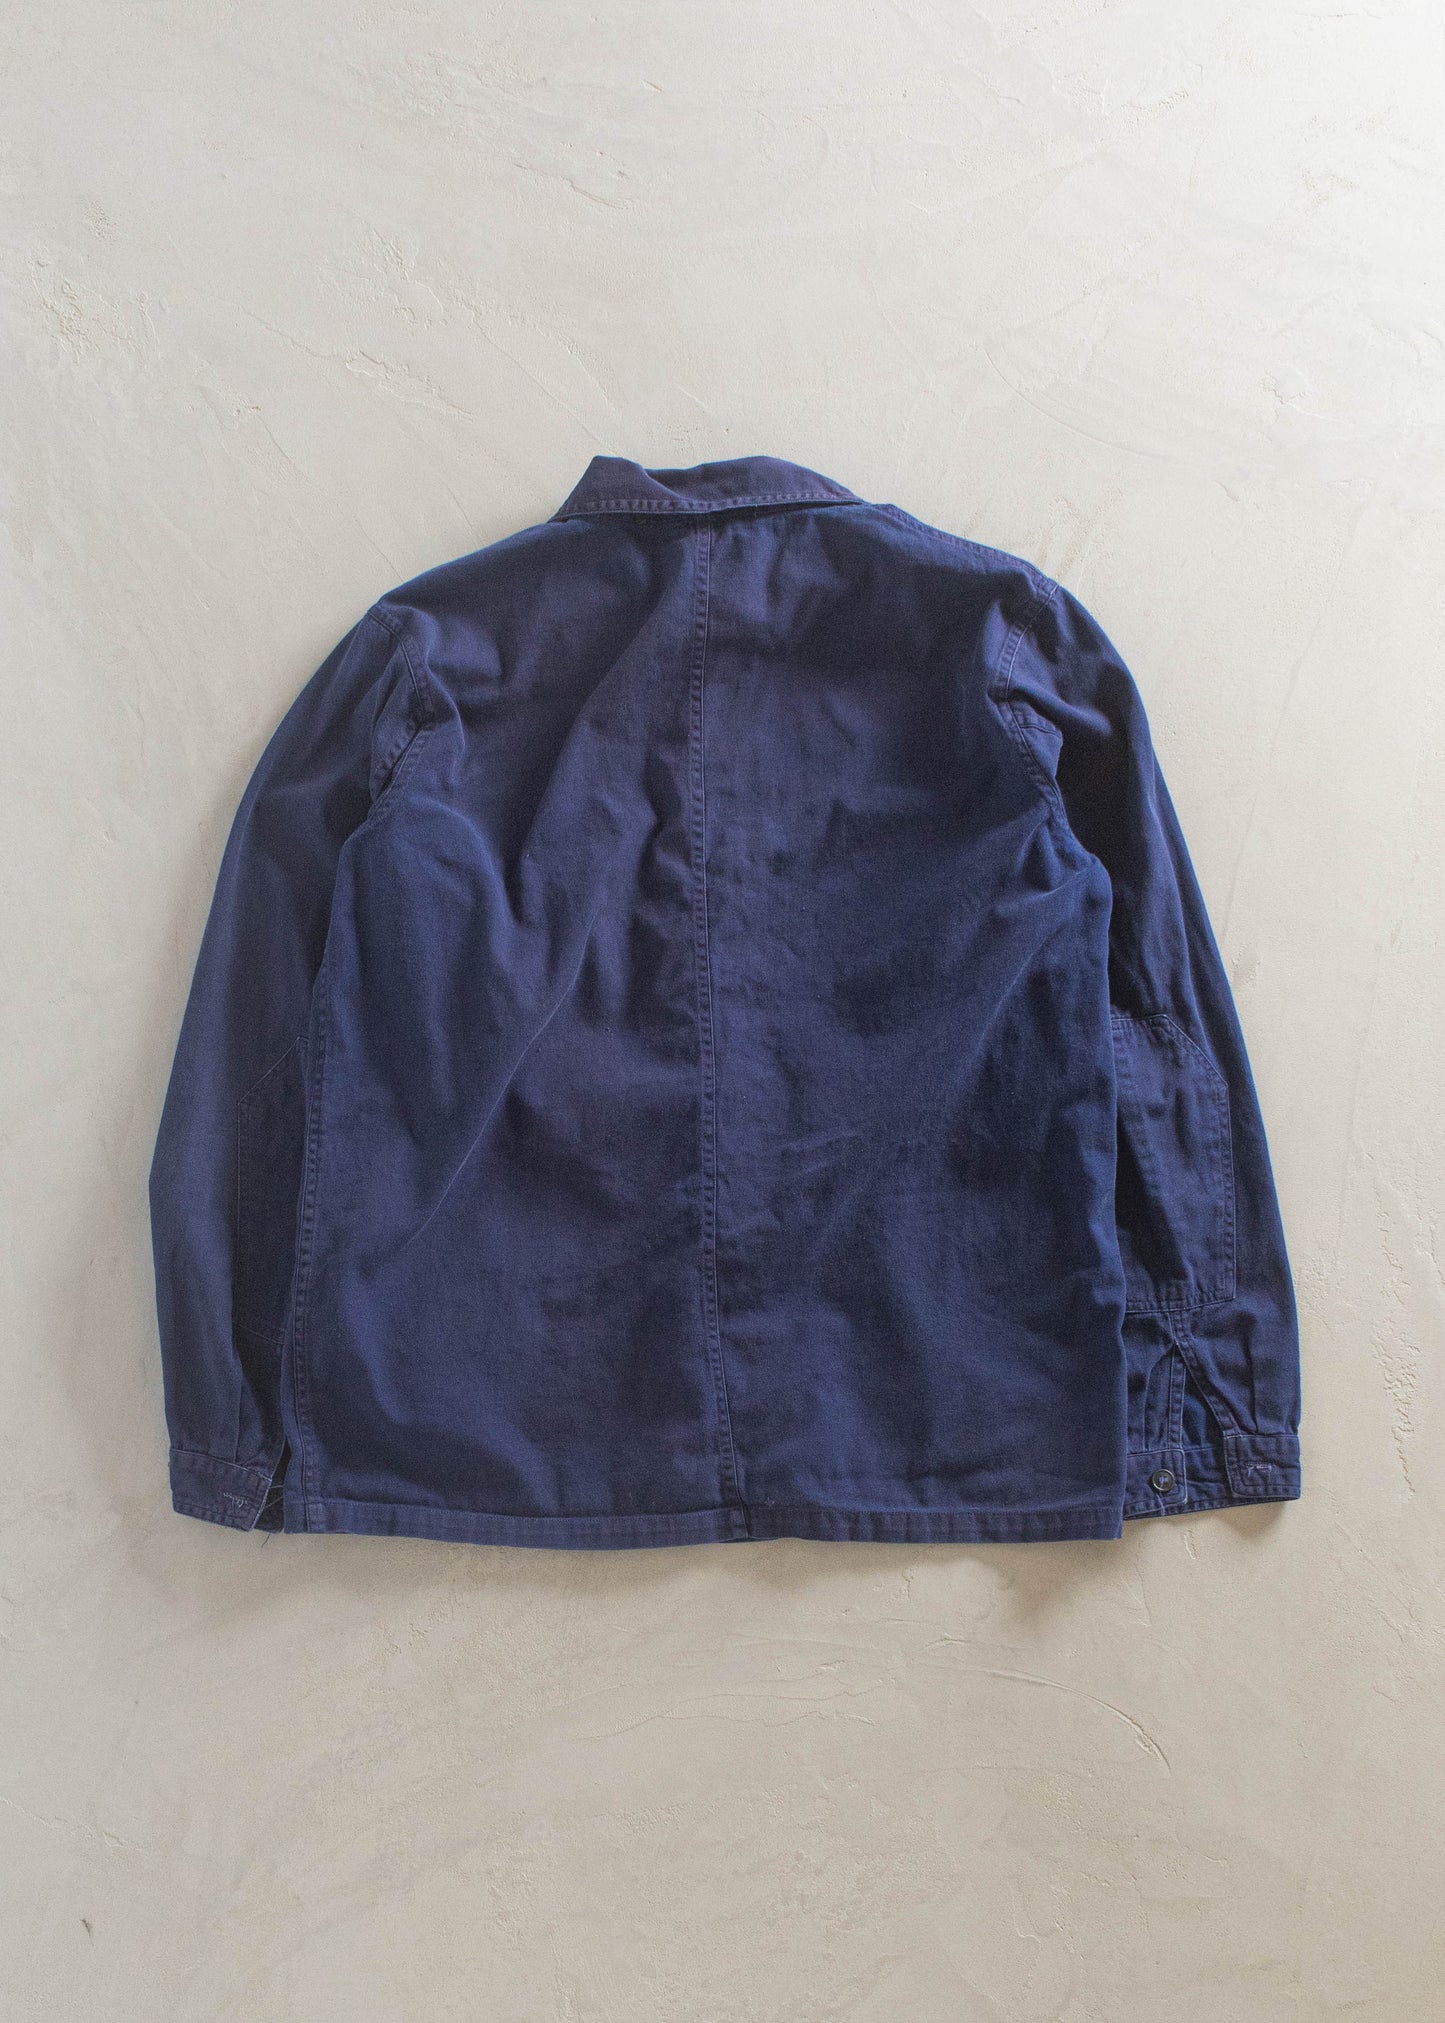 1980s European Workwear Chore Jacket Size XS/S